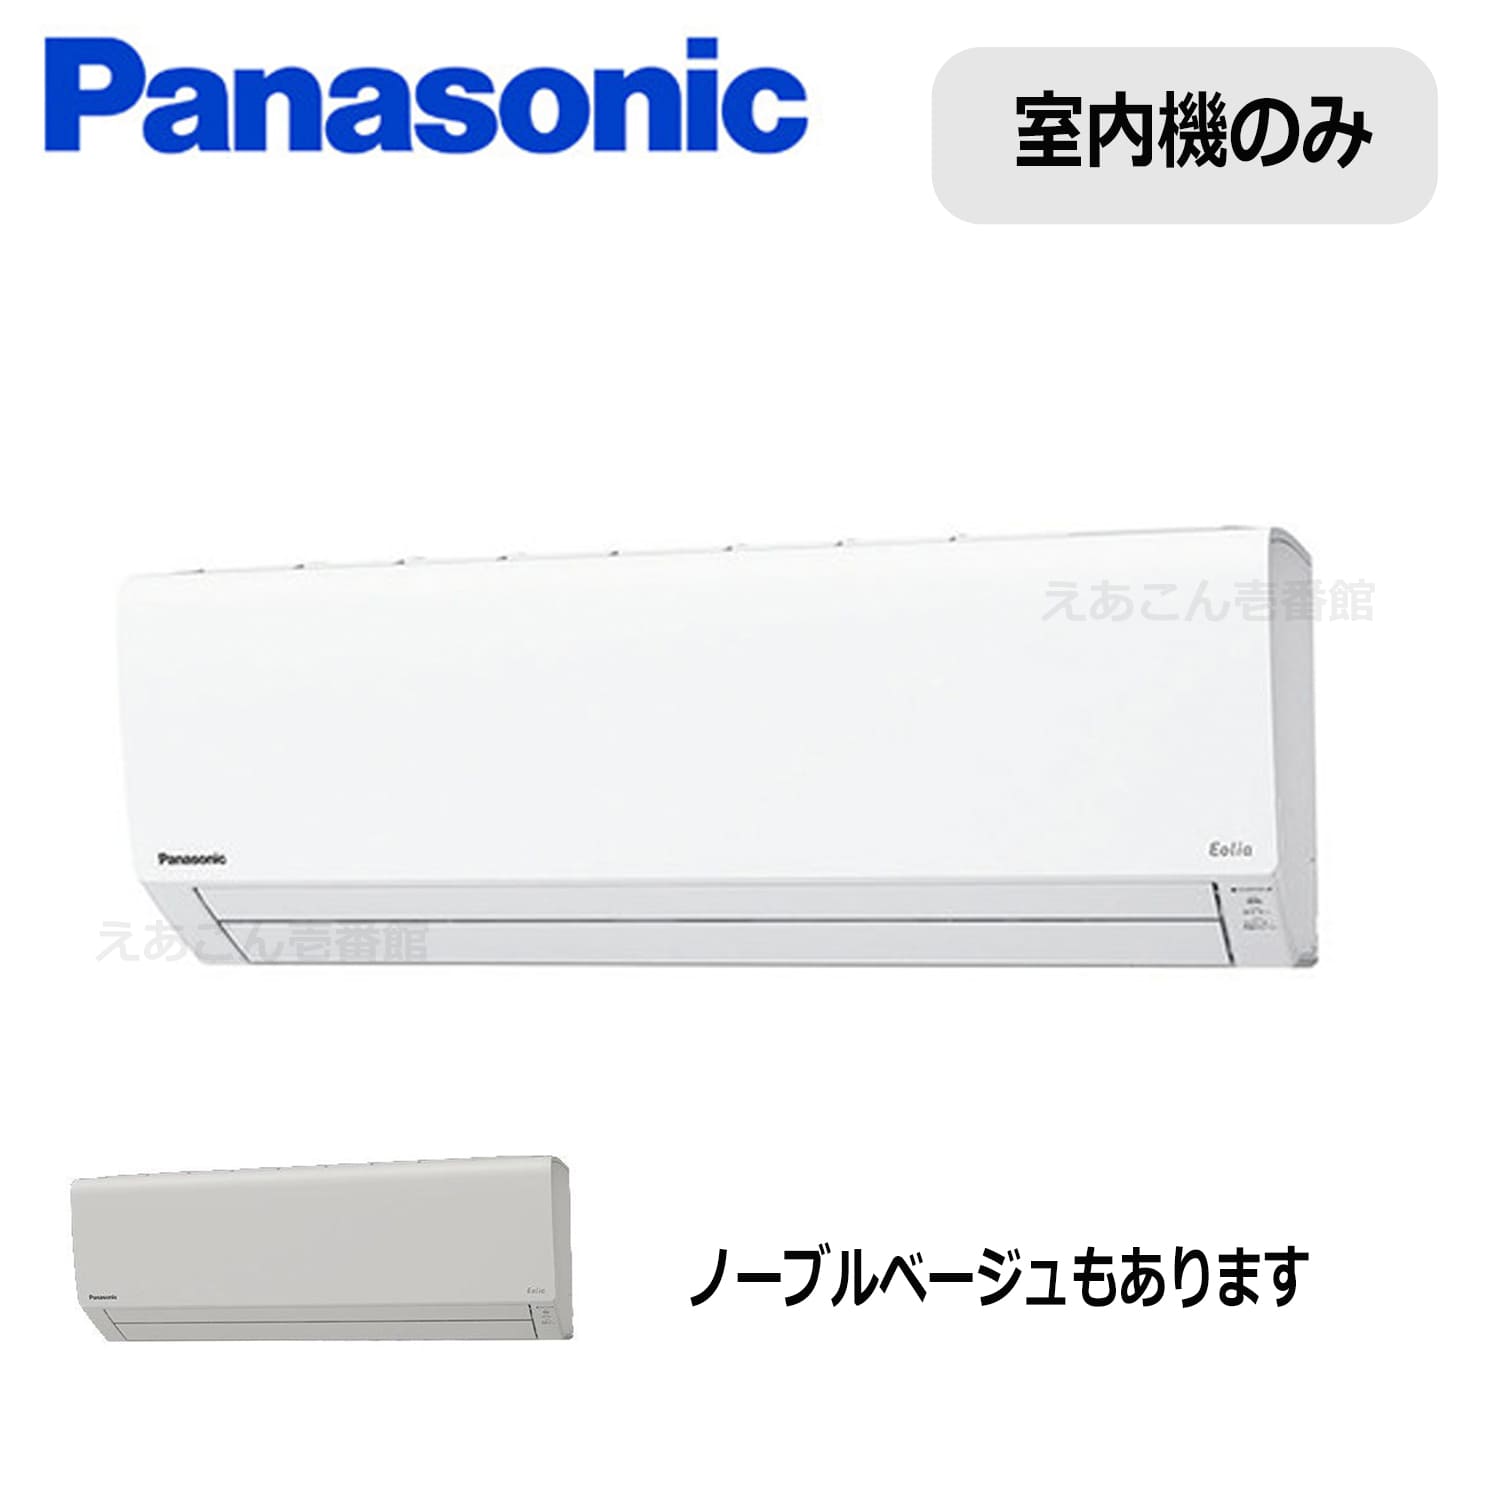 Panasonic  CS-MJ400D2  壁掛形　4.0kw　システムマルチ室内機（単相　200V　ワイヤレス）主に14畳用　※室内機のみの為別途室外機が必要となります。